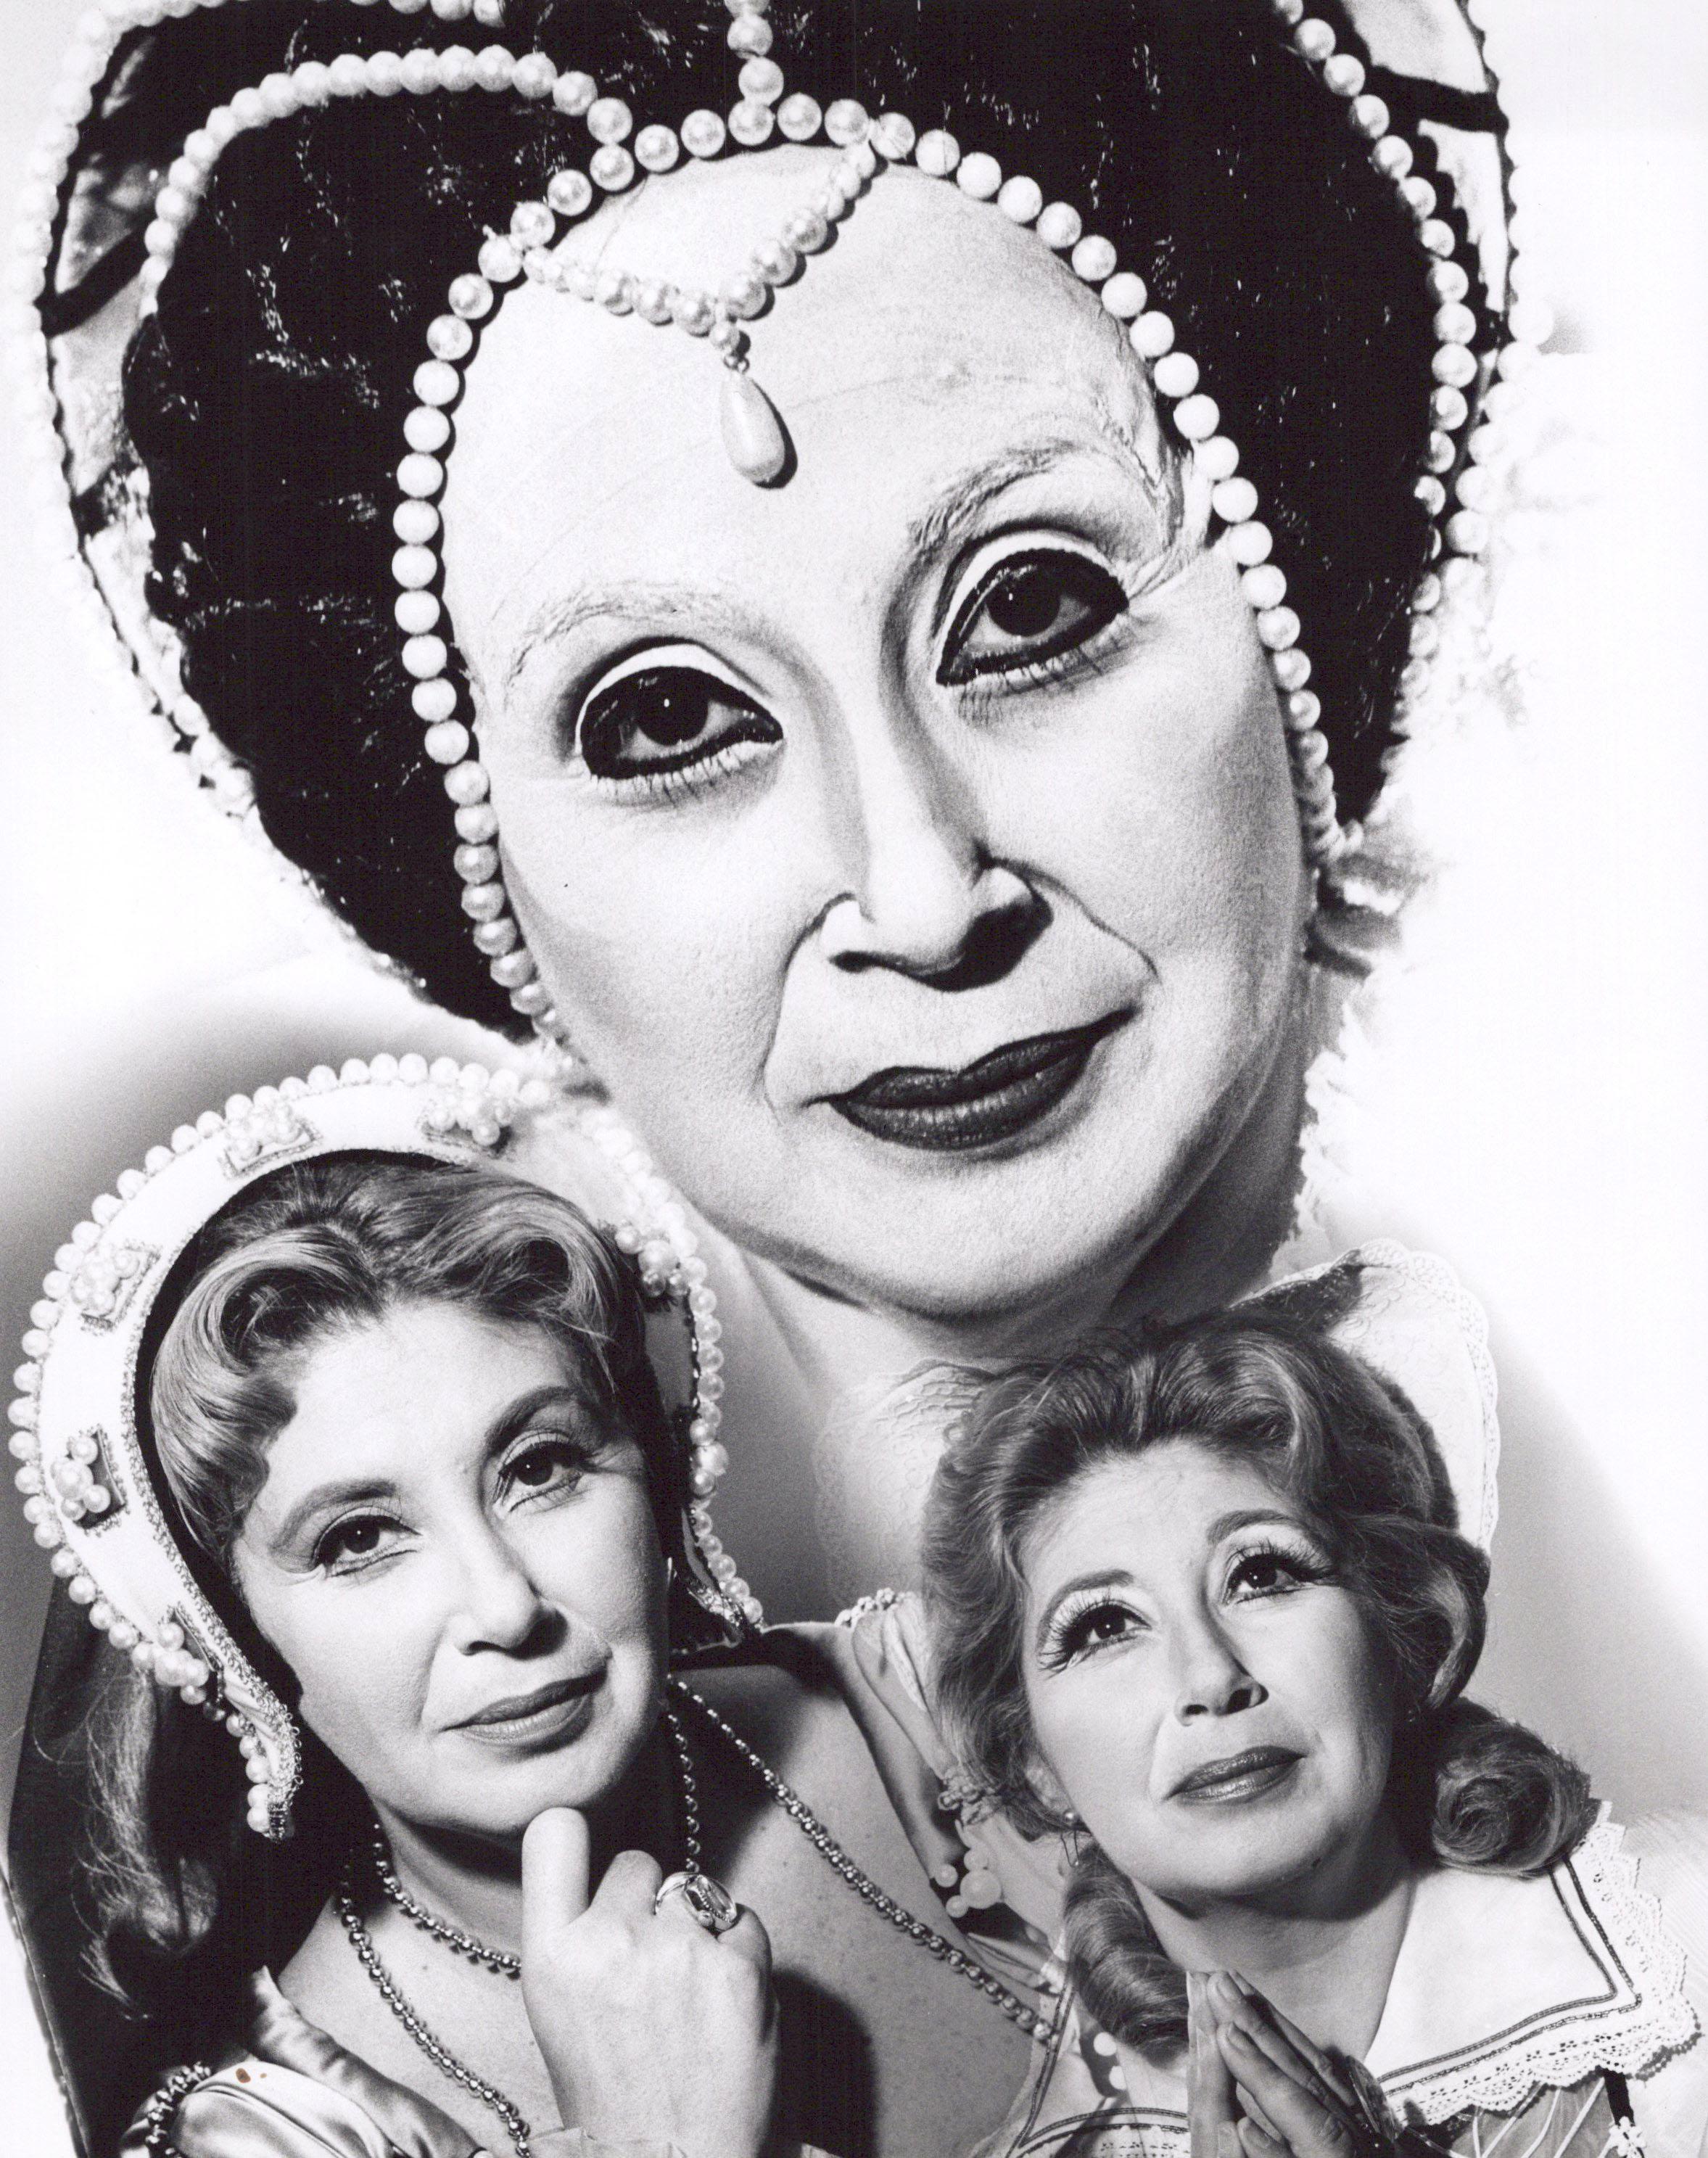 Jack Mitchell Black and White Photograph - Operatic soprano Beverly Sills as Elizabeth I, Mary Stuart and Anne Boleyn